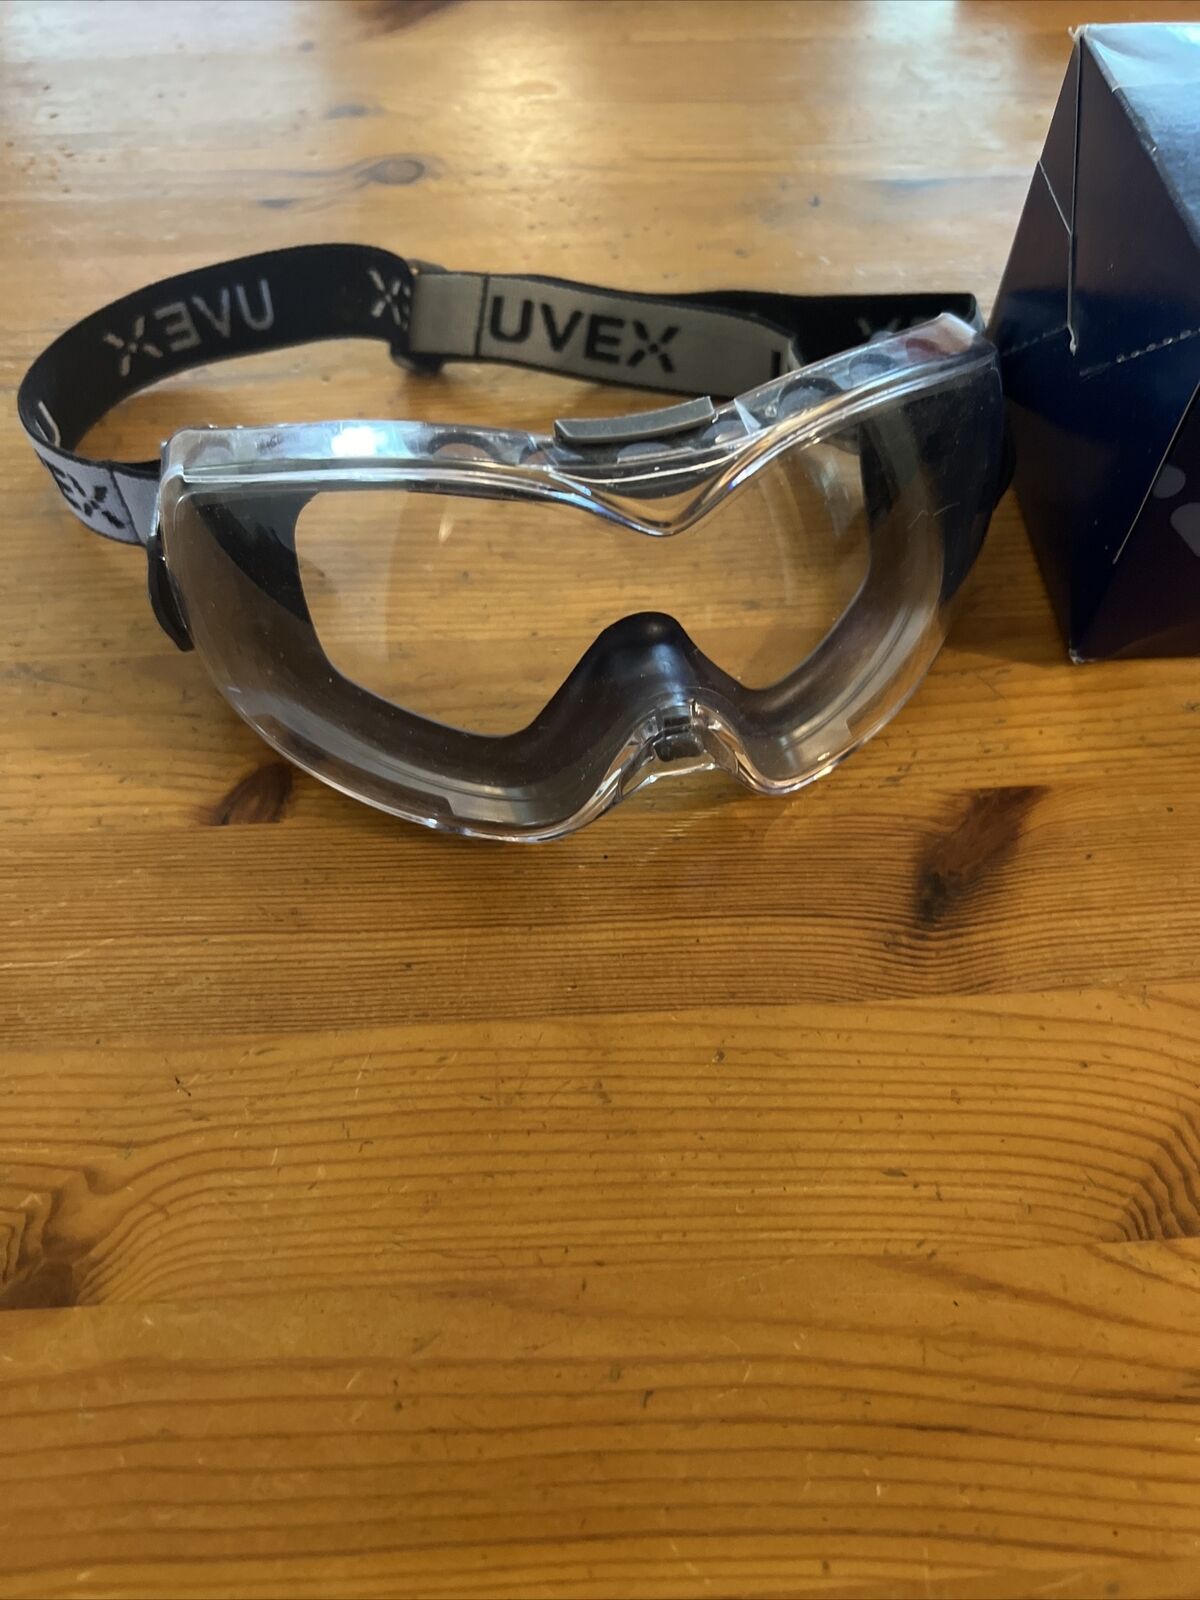 Honeywell Uvex Safety Goggles Anti-Fog HydroShield Scratch-Resistant S3970DE